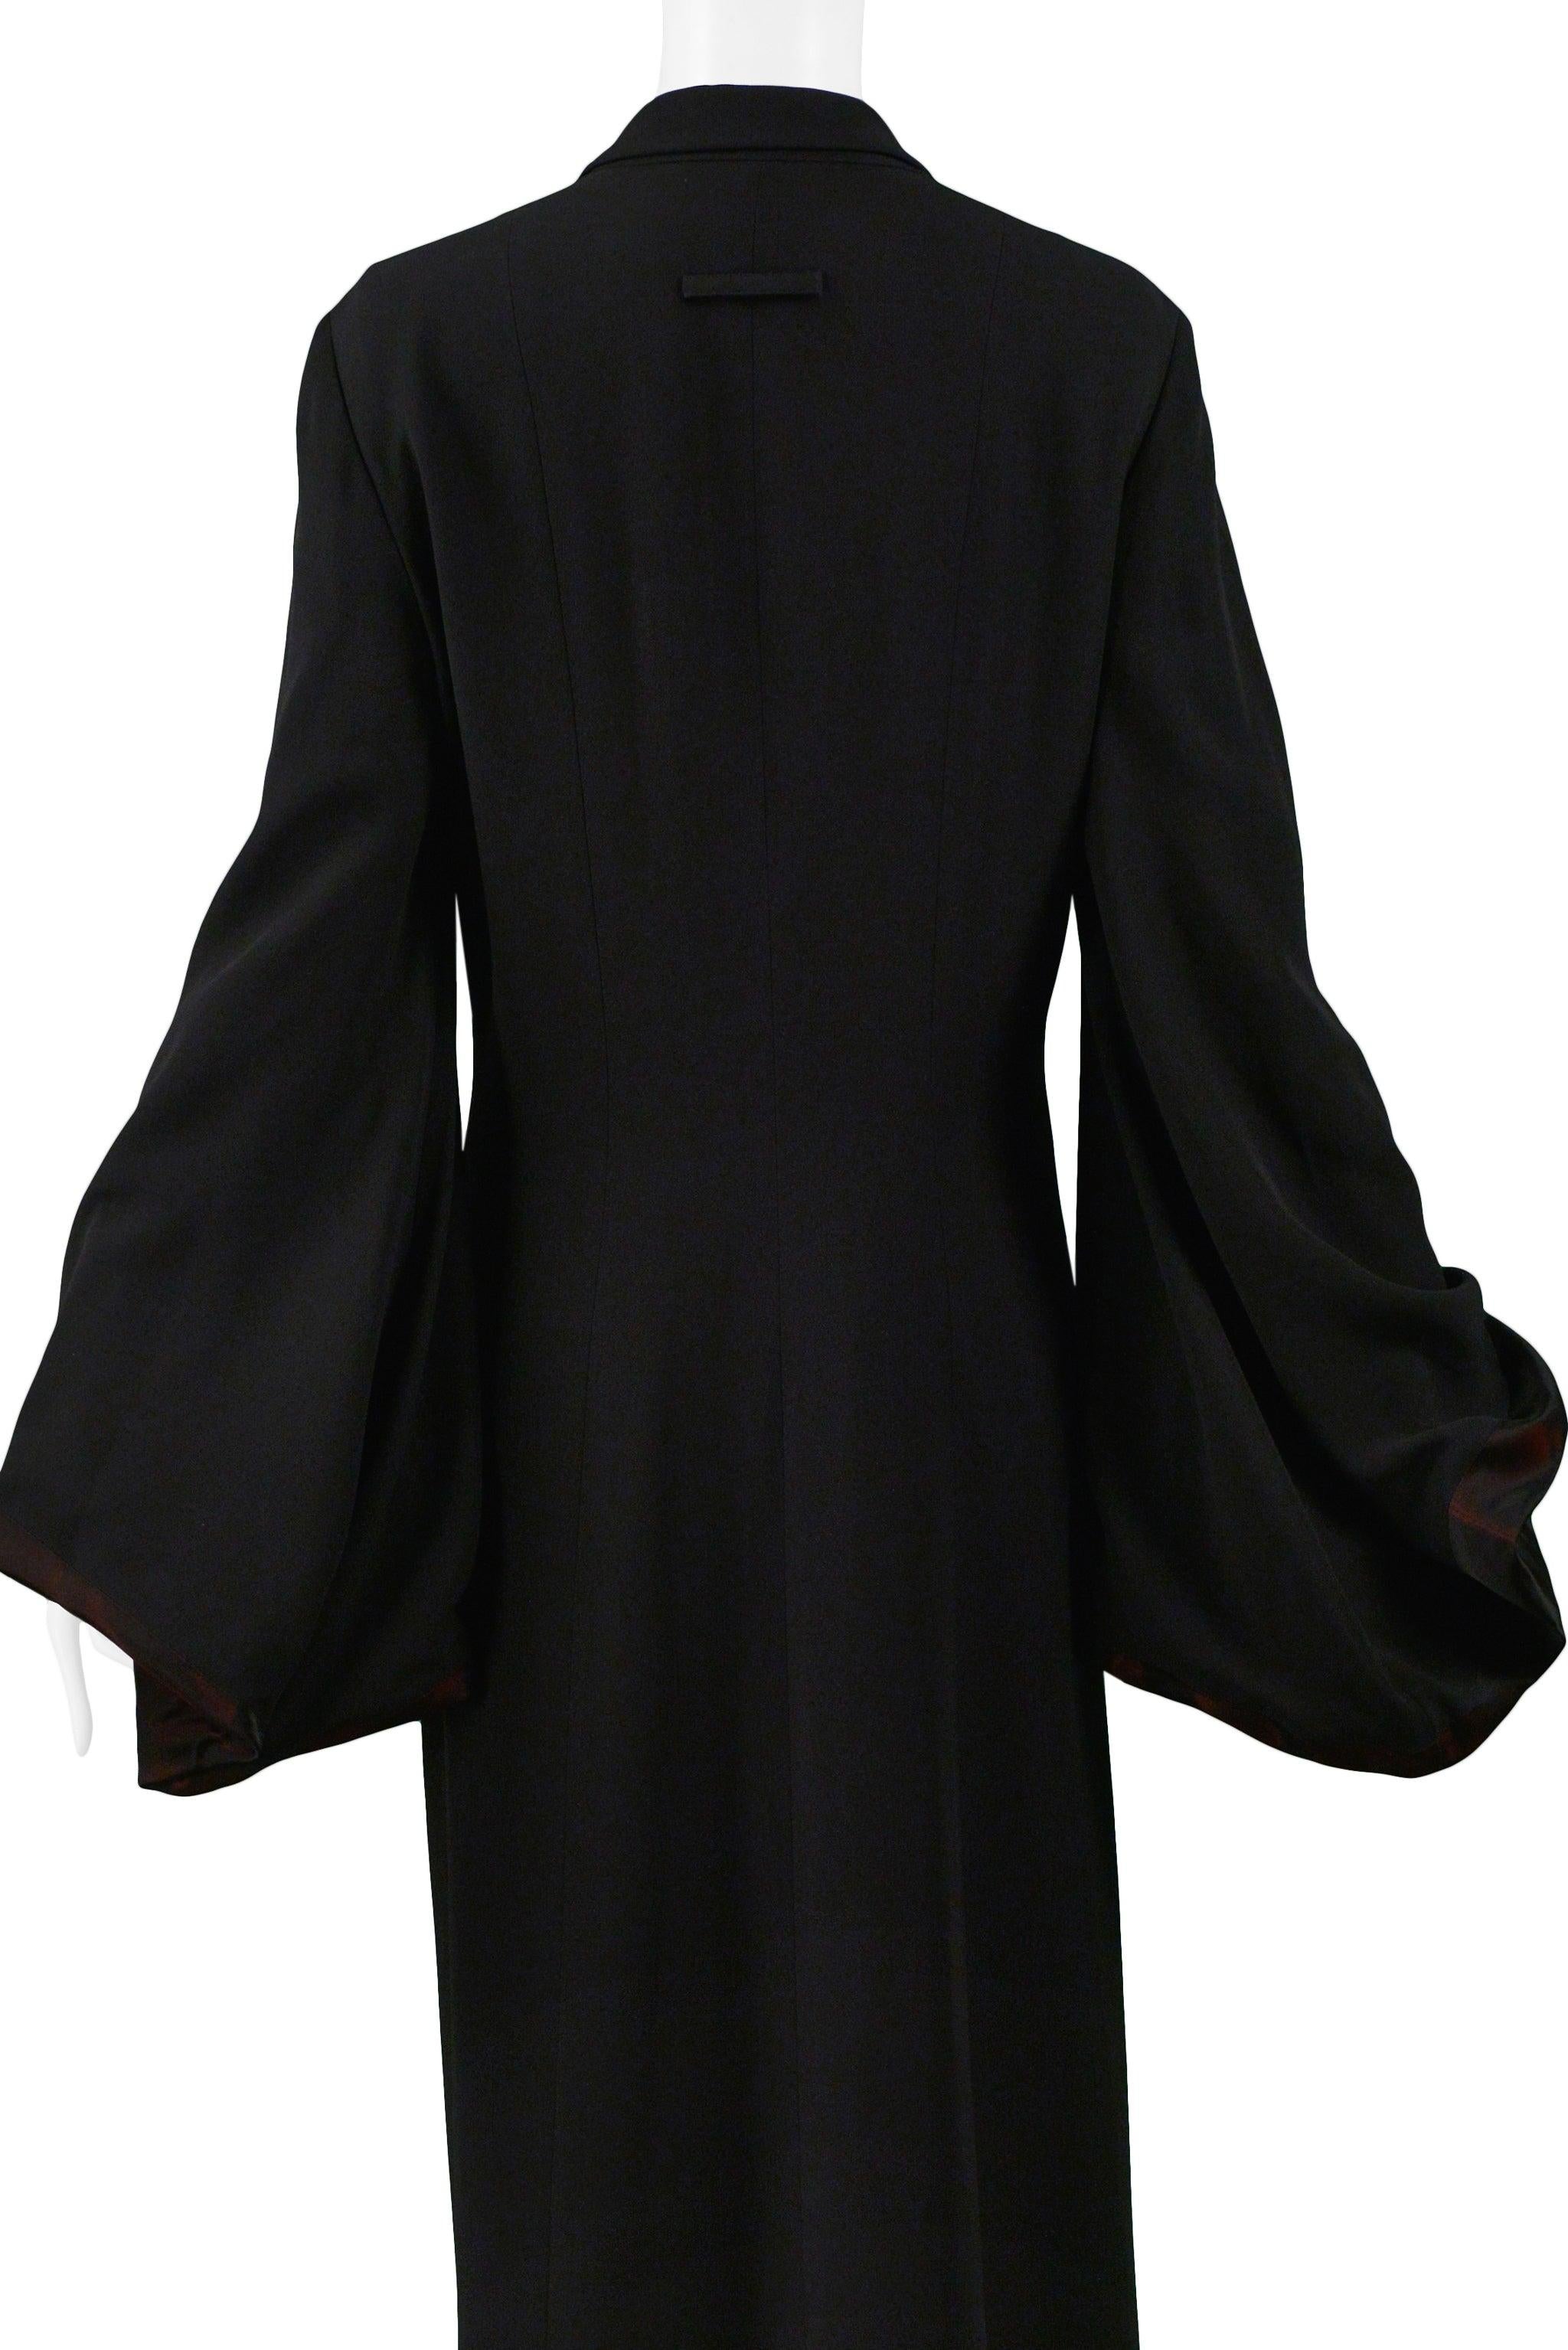 Jean Paul Gaultier Black Kimono Coat With Burgundy Taffeta Bubble Sleeves 1